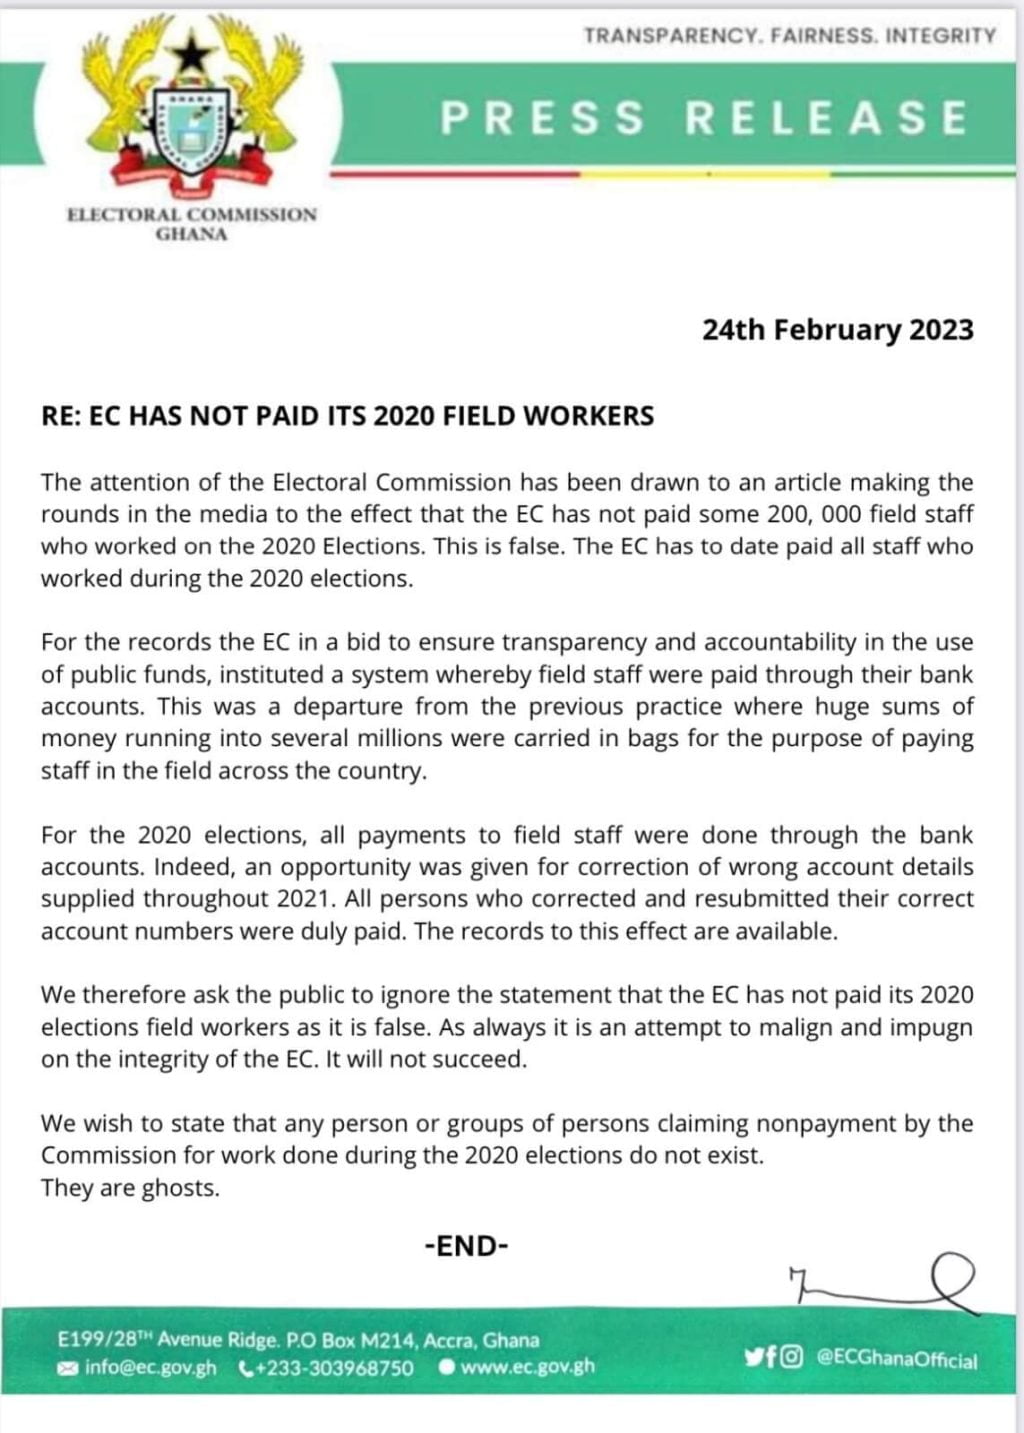 Unpaid 2020 field workers in Ghana